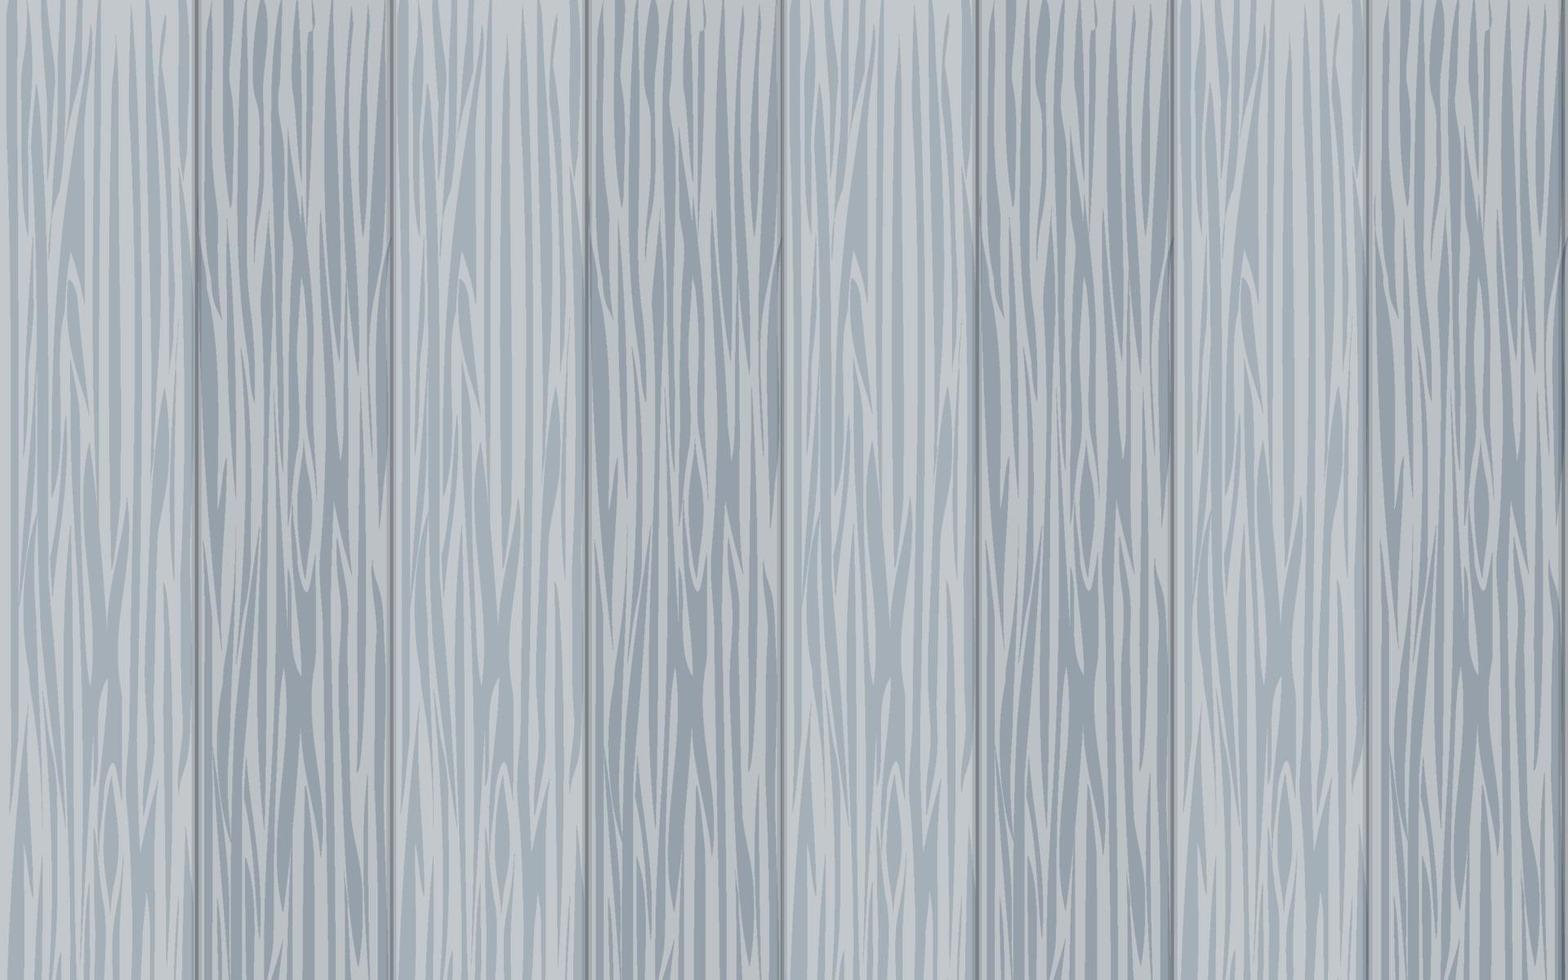 ligero azul madera antecedentes. textura de ligero marrón de madera tablones vector